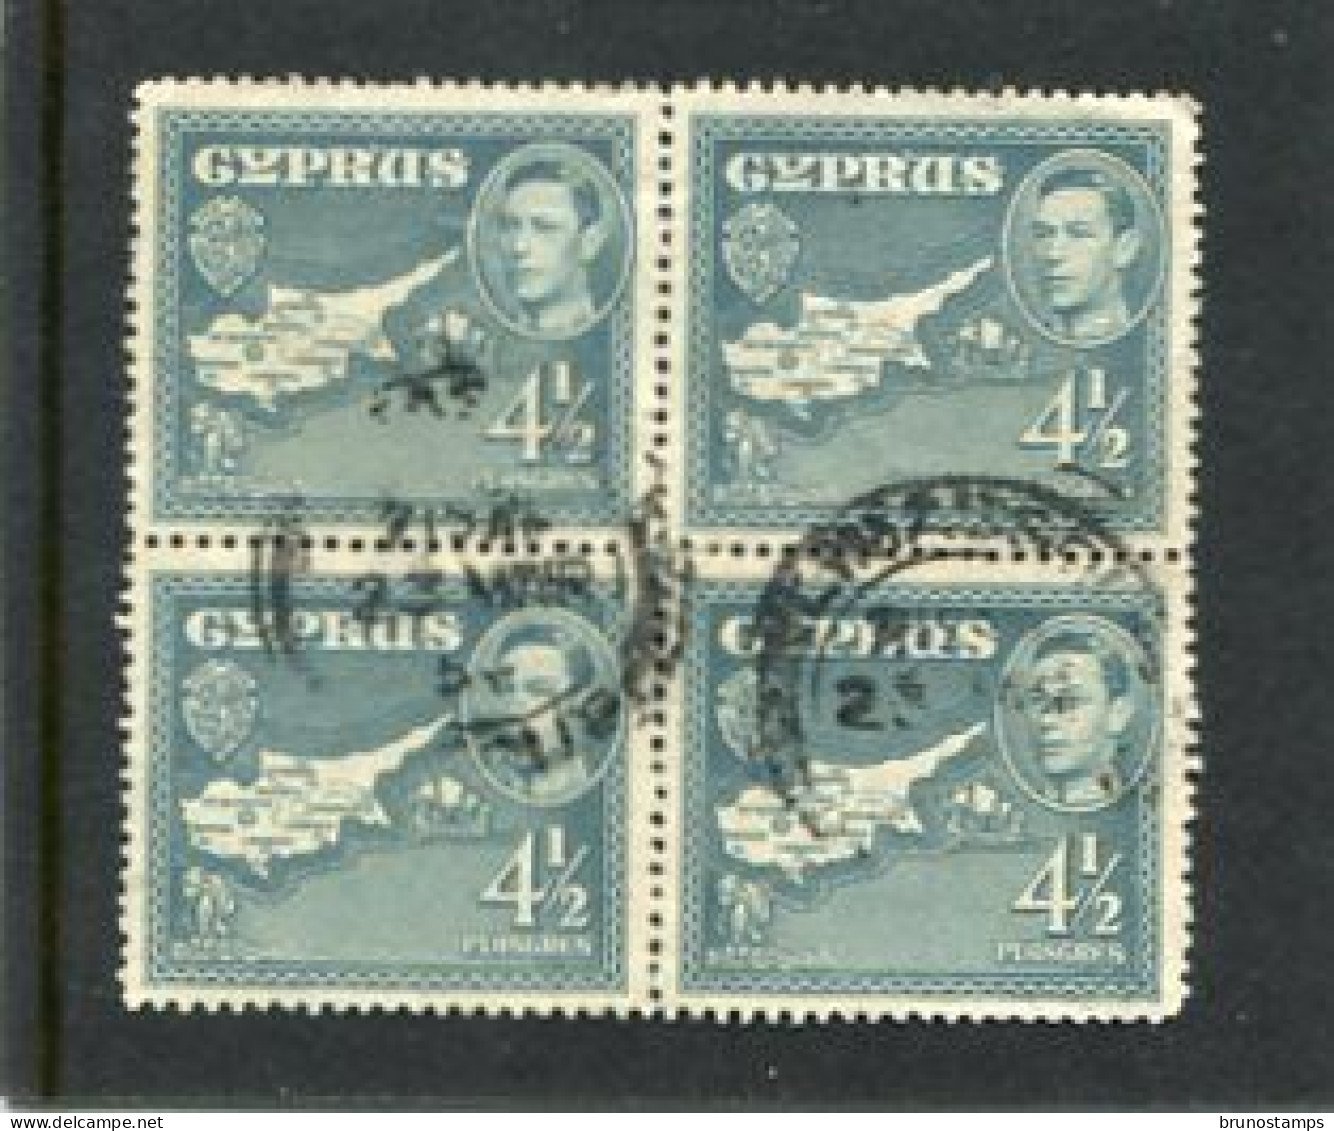 CYPRUS - 1938  GEORGE VI  4 1/2 Pi  BLOCK OF 4 FINE USED - Chypre (...-1960)